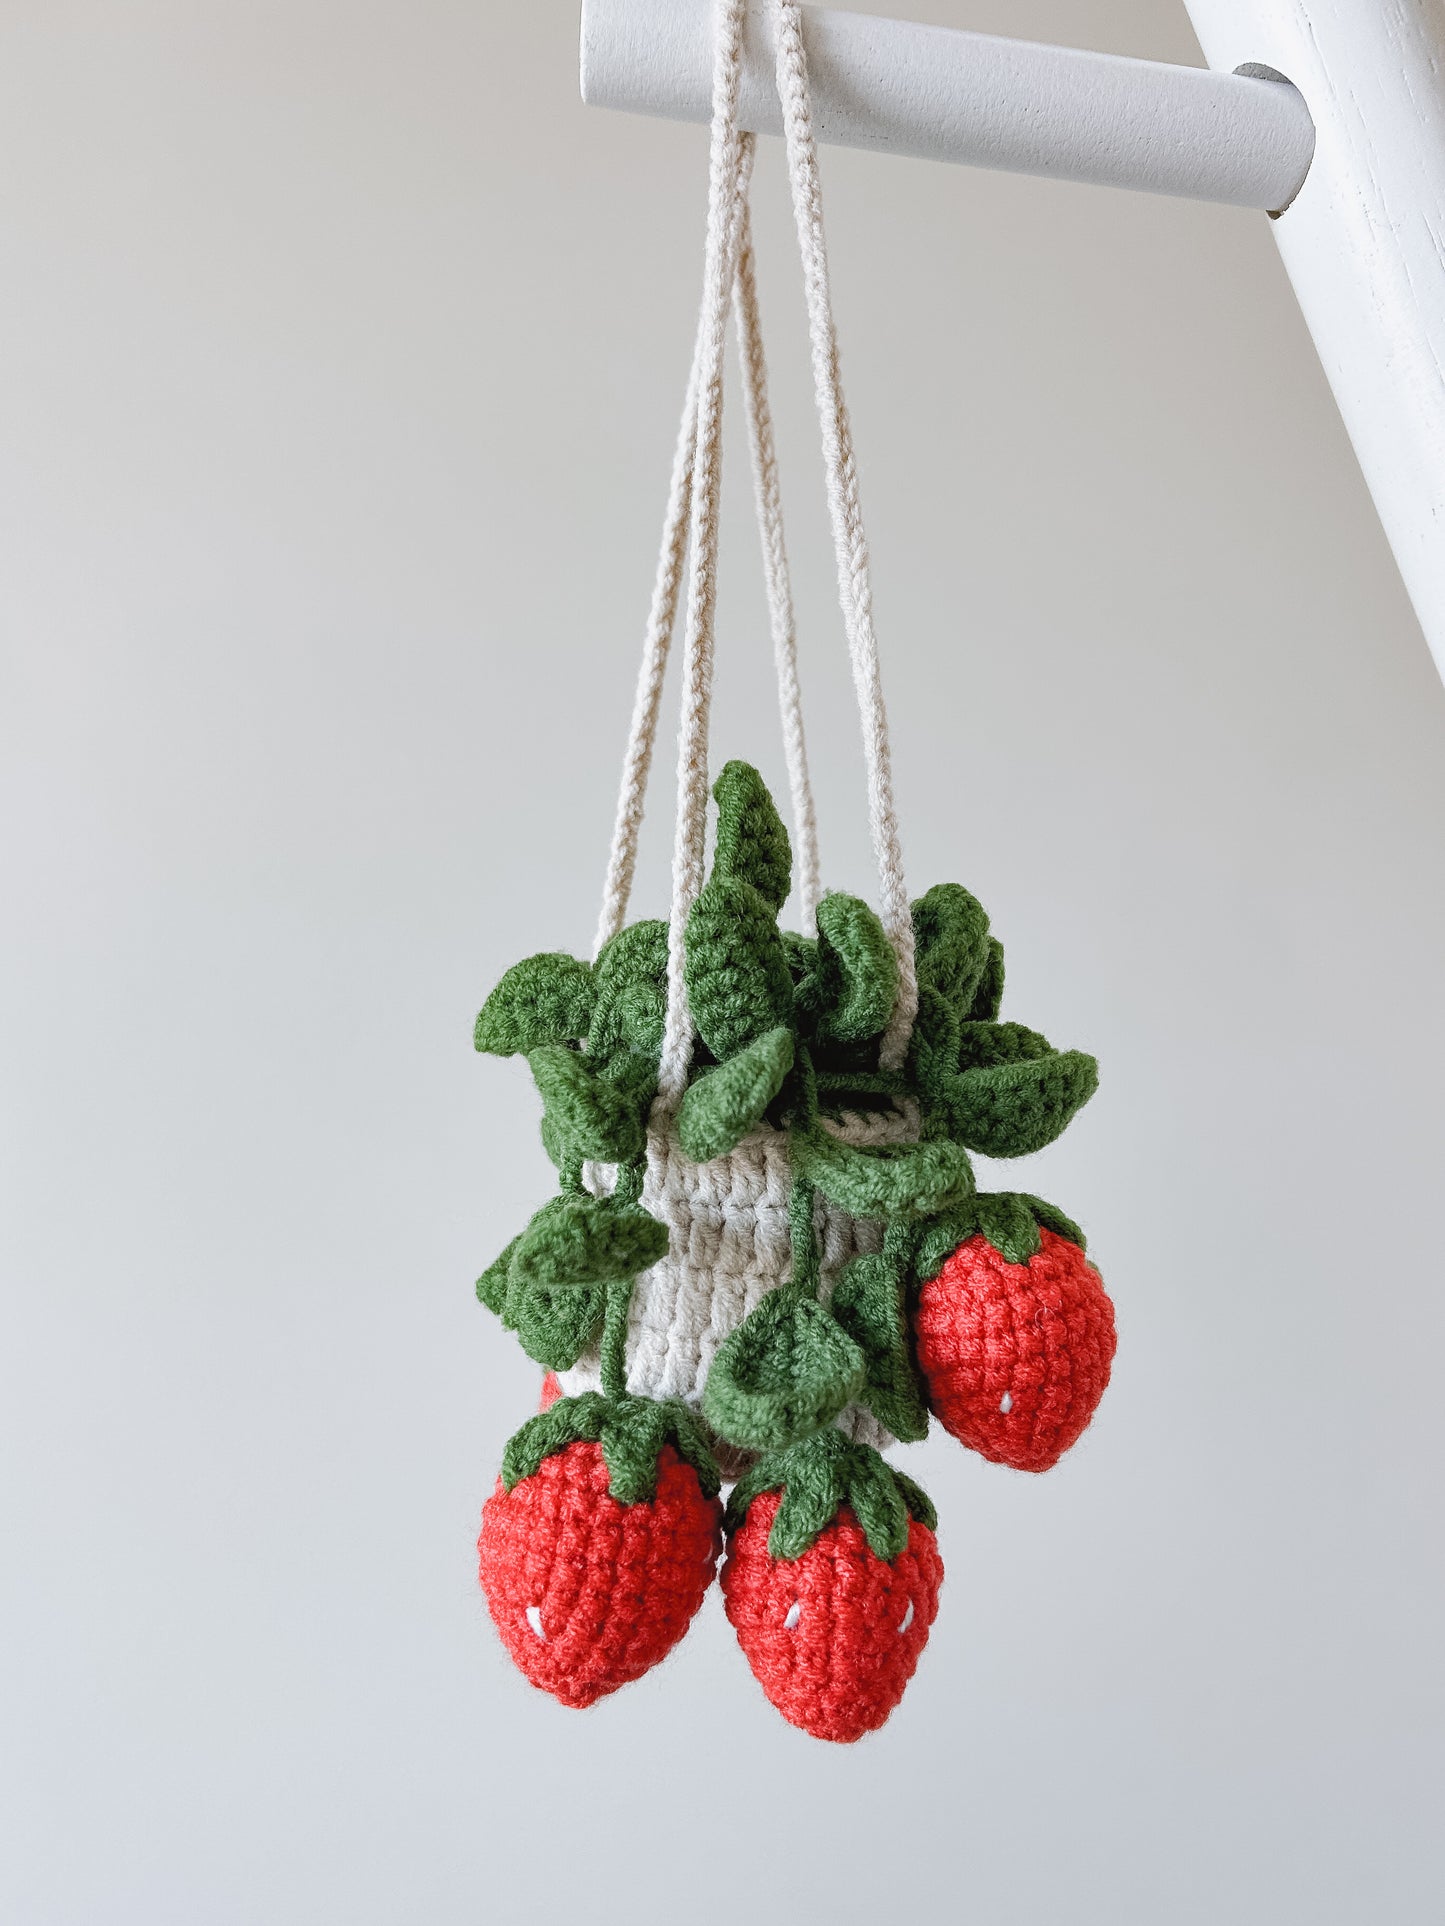 Hanging Crochet Plant